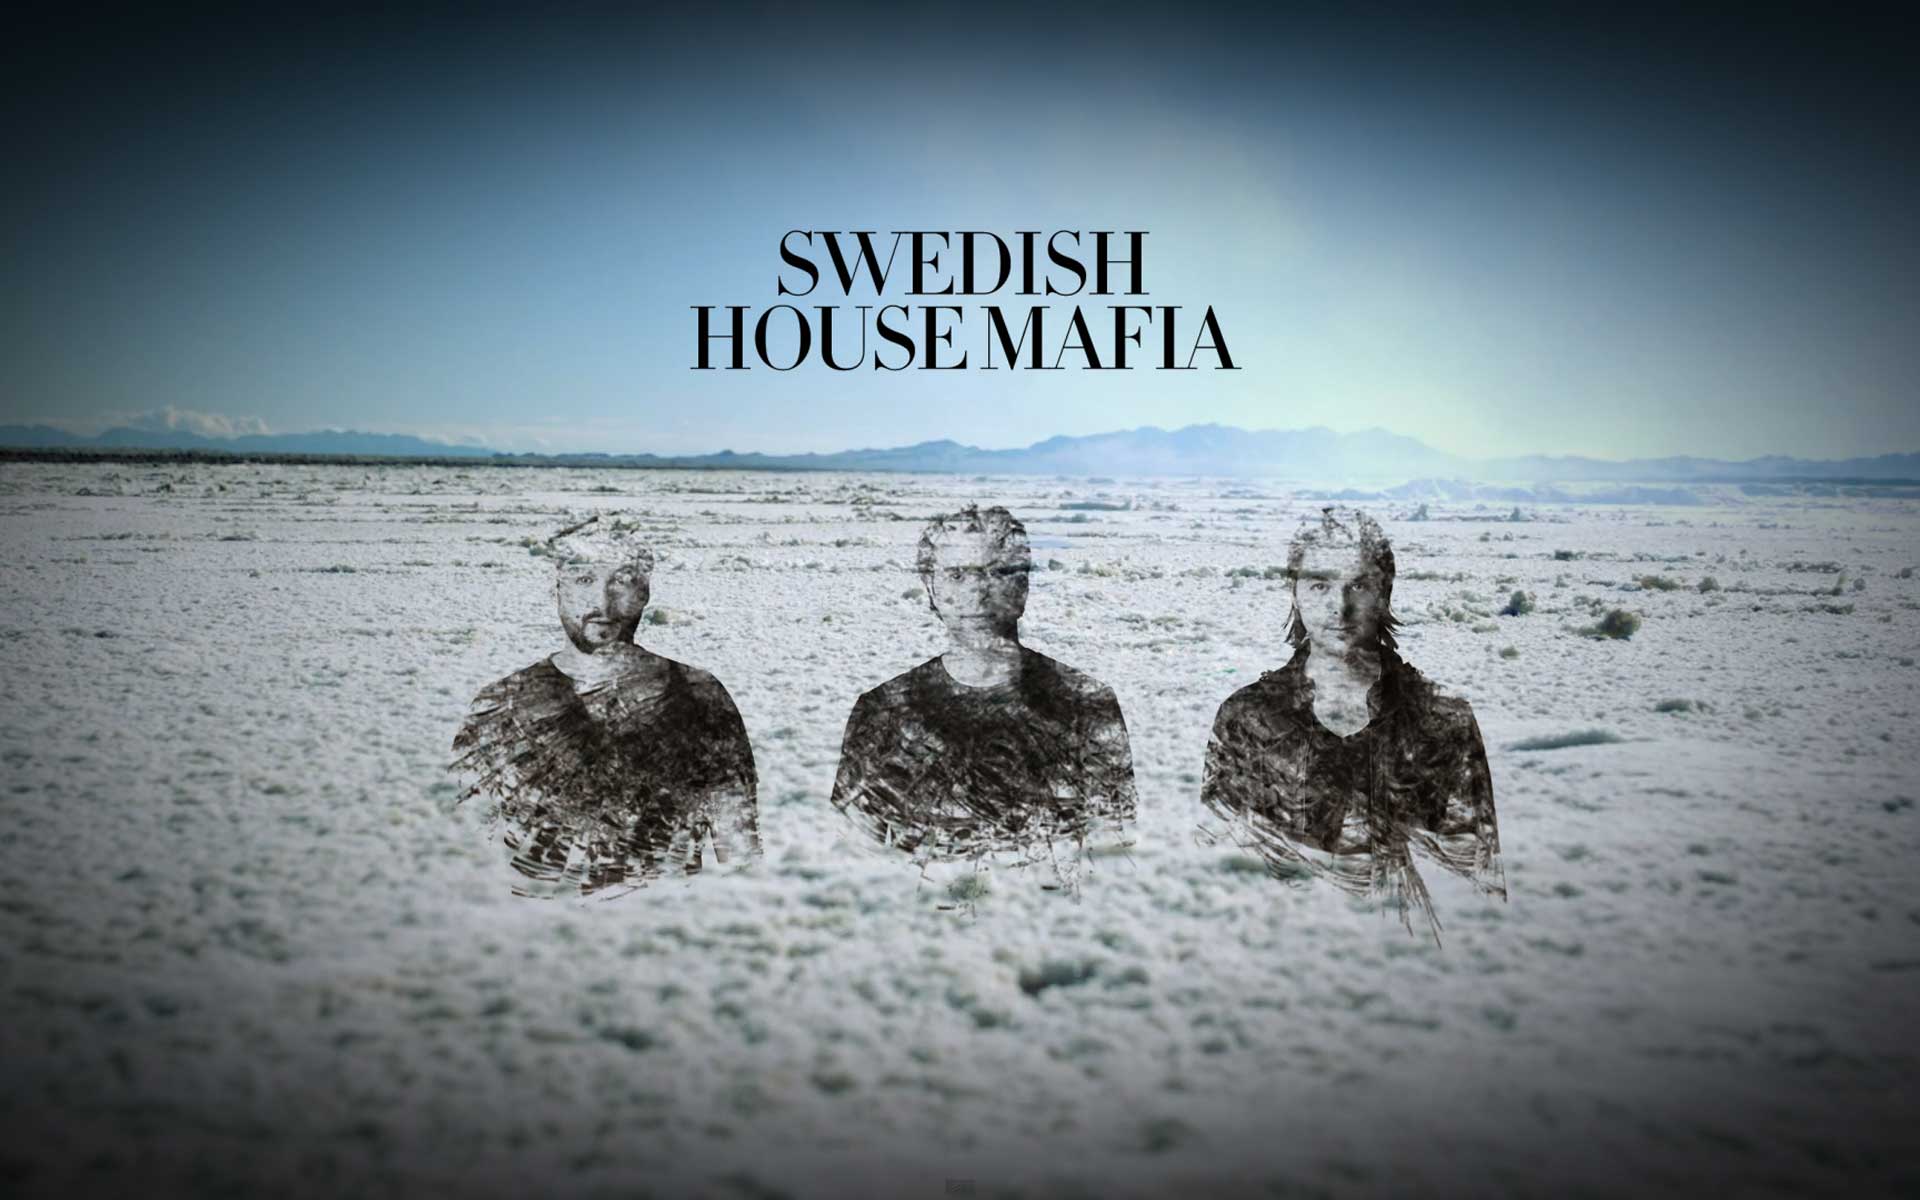 Swedish House Mafia Wallpaper